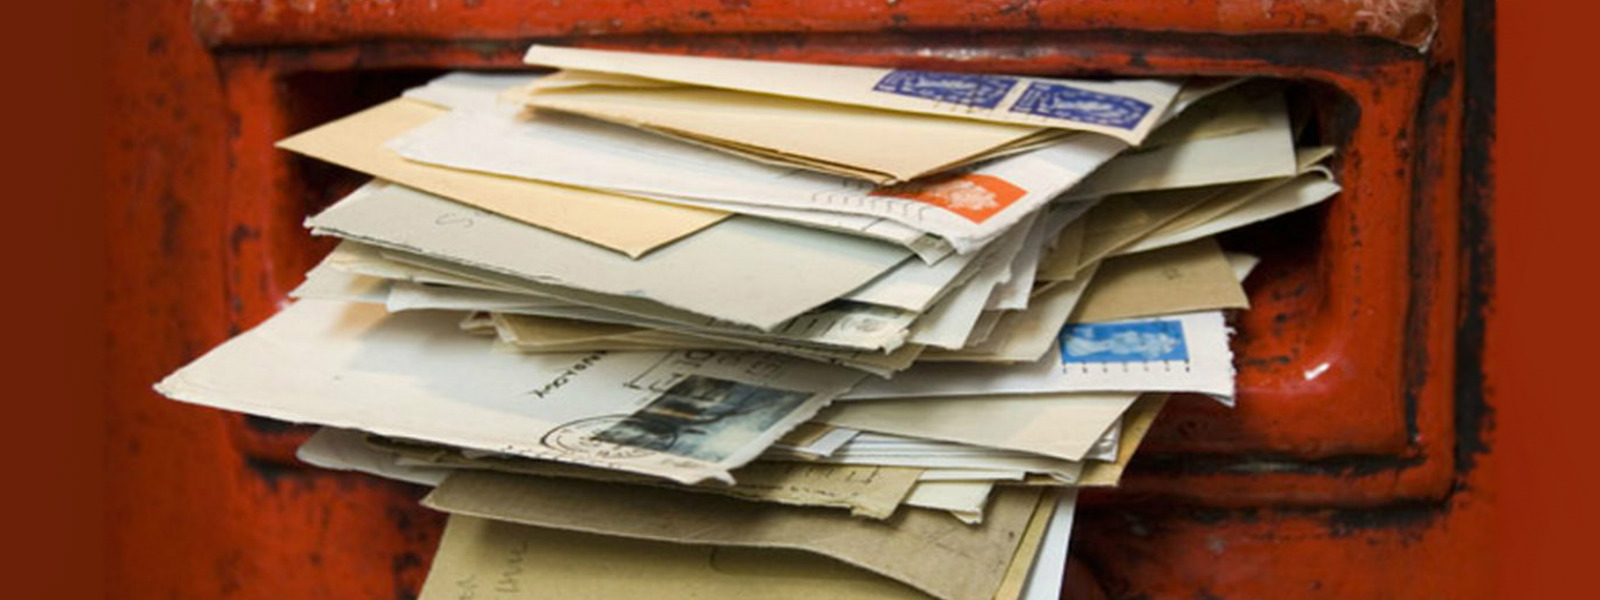 Postal activities hampered